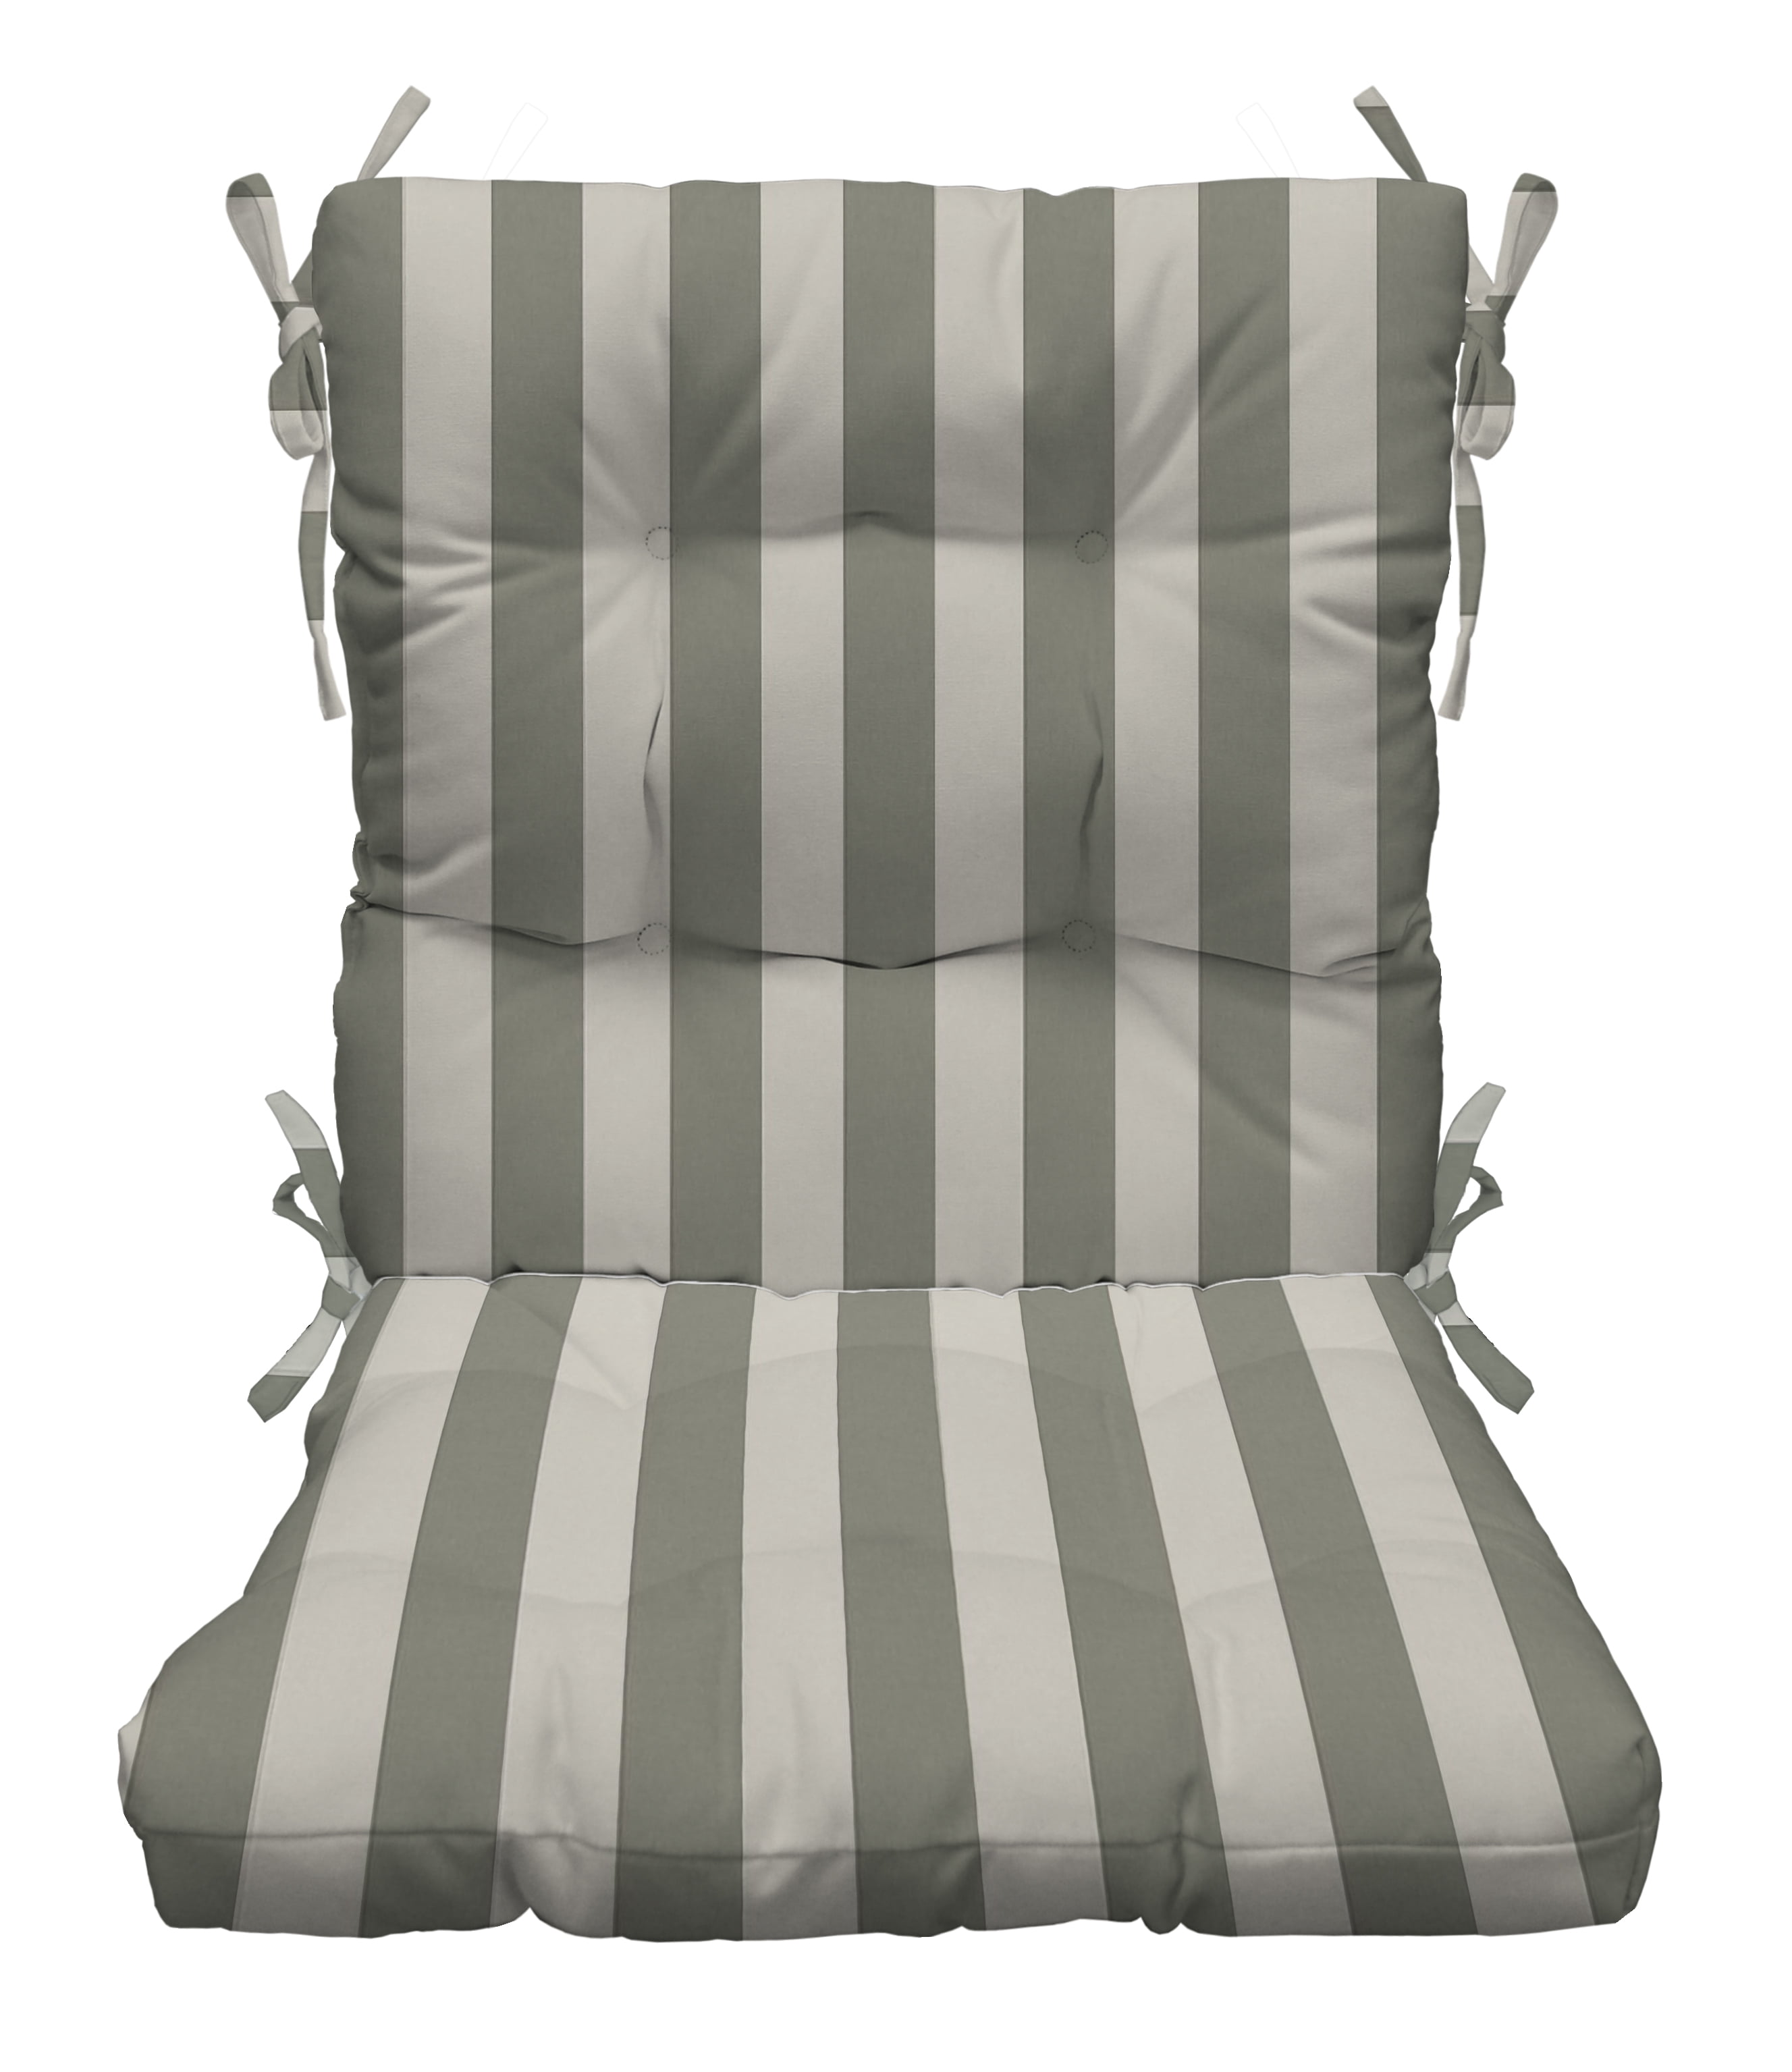 Set of 4 Choose Size Indoor Outdoor Solid Kiwi Green Foam Chair Cushions 